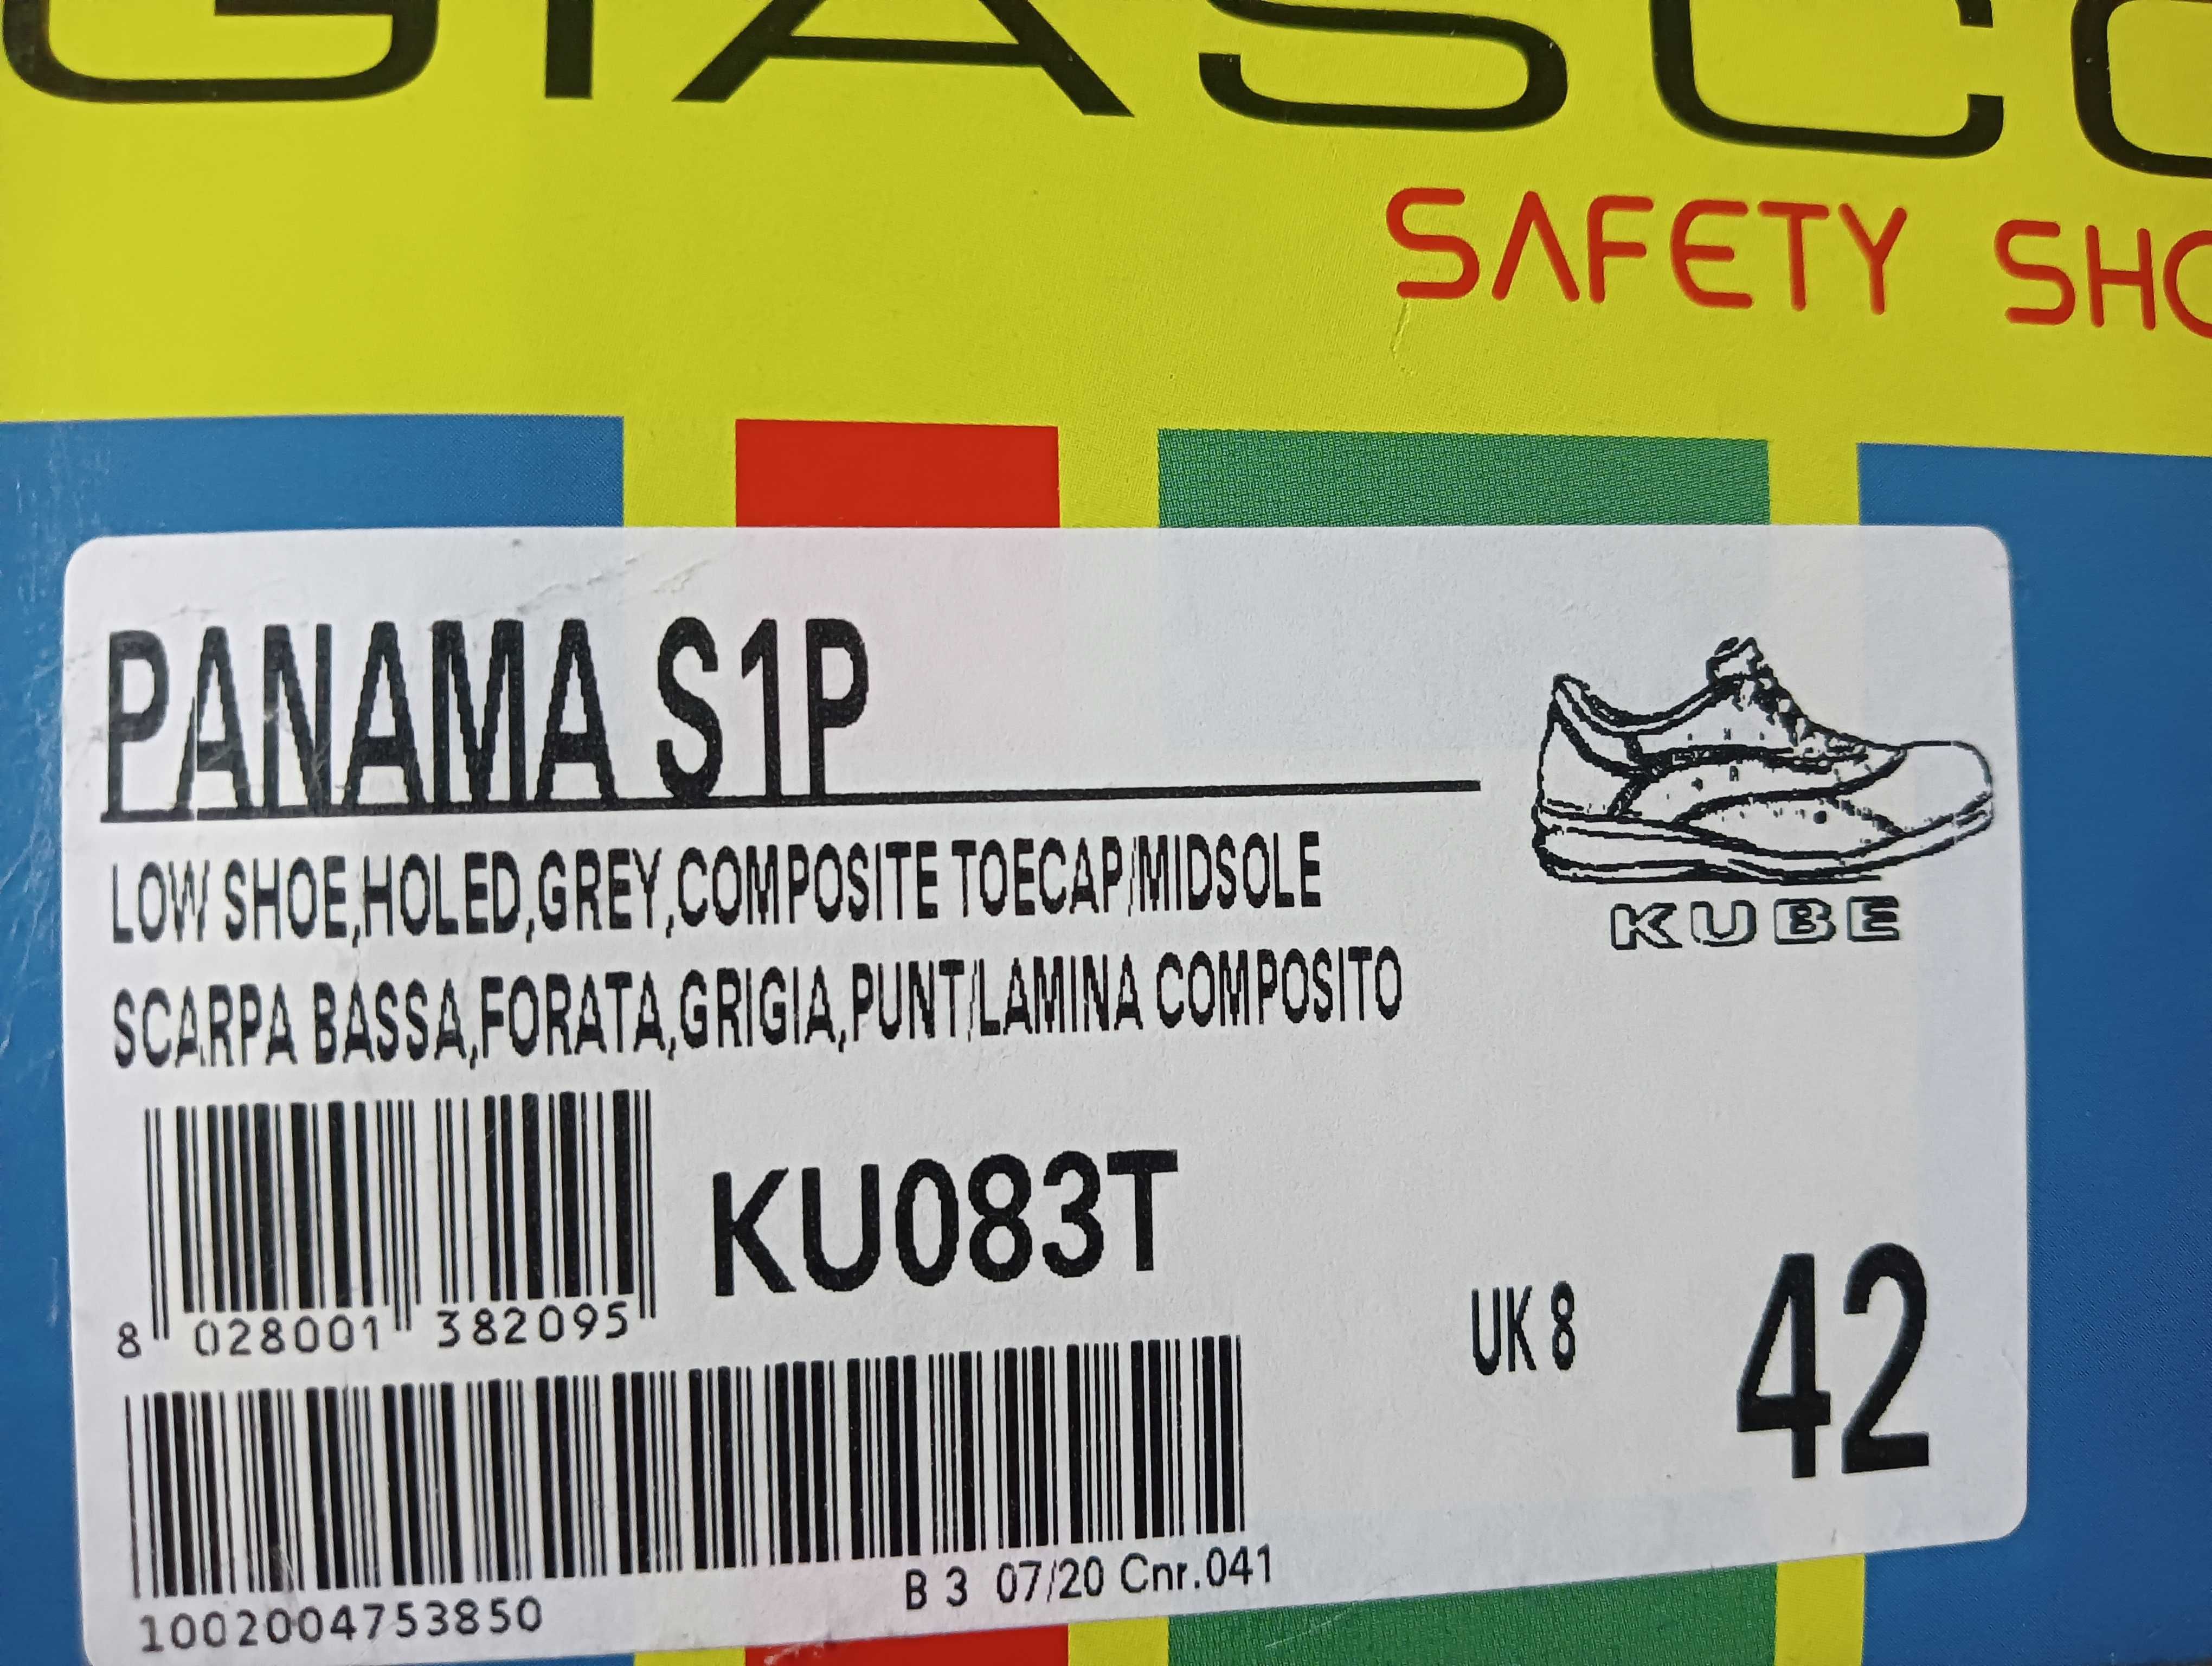 Buty robocze GIASCO Panama S1P; rozmiar 42